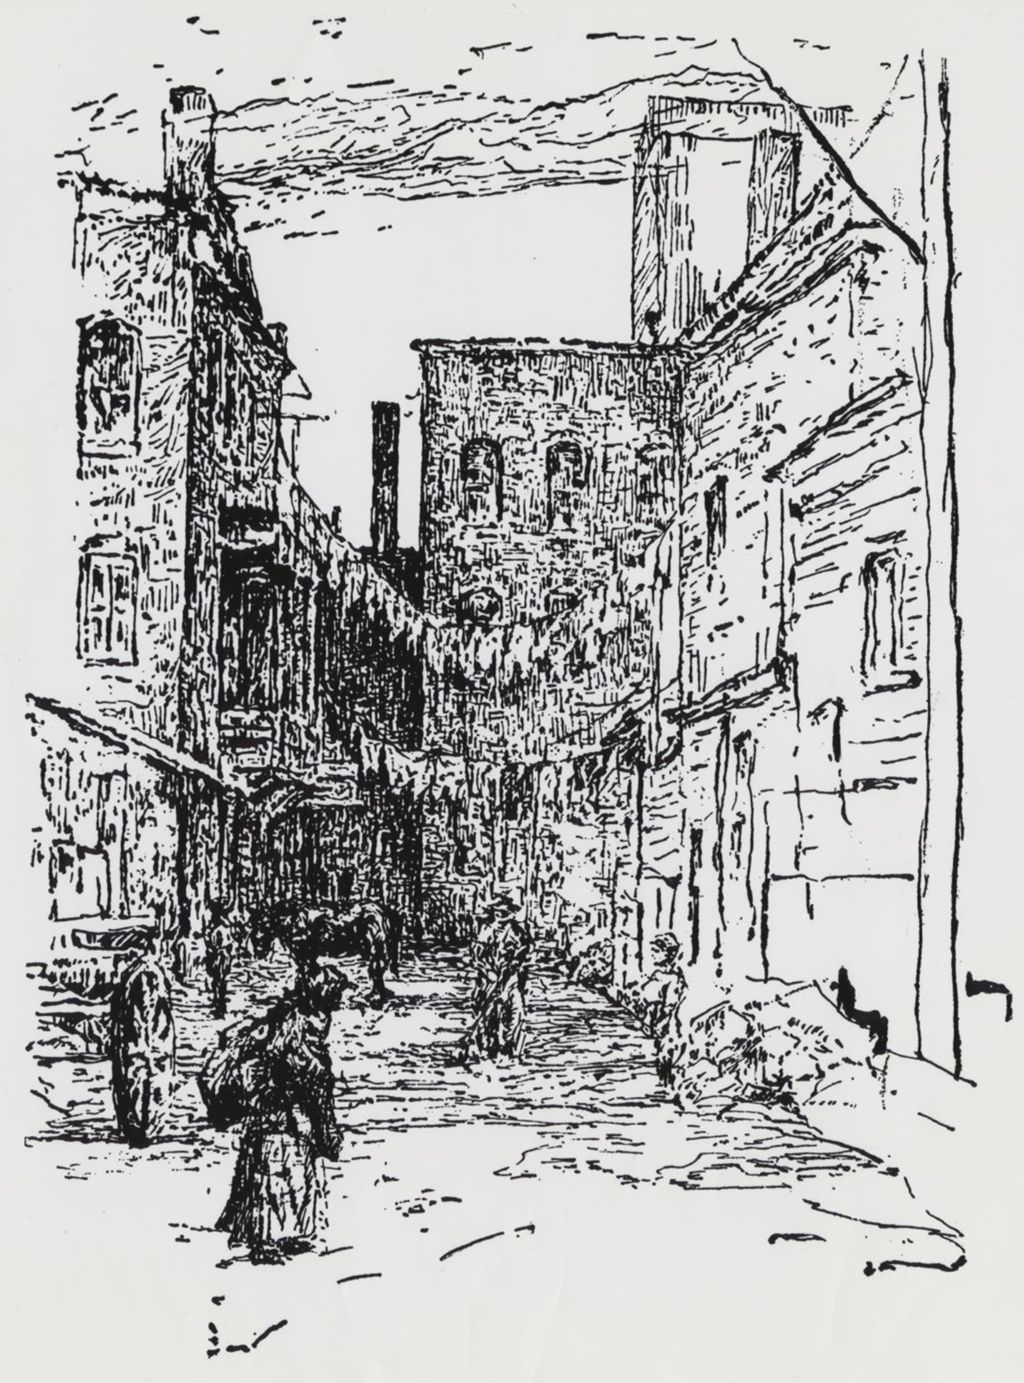 Norah Hamilton drawing "An Alley near Hull-House"